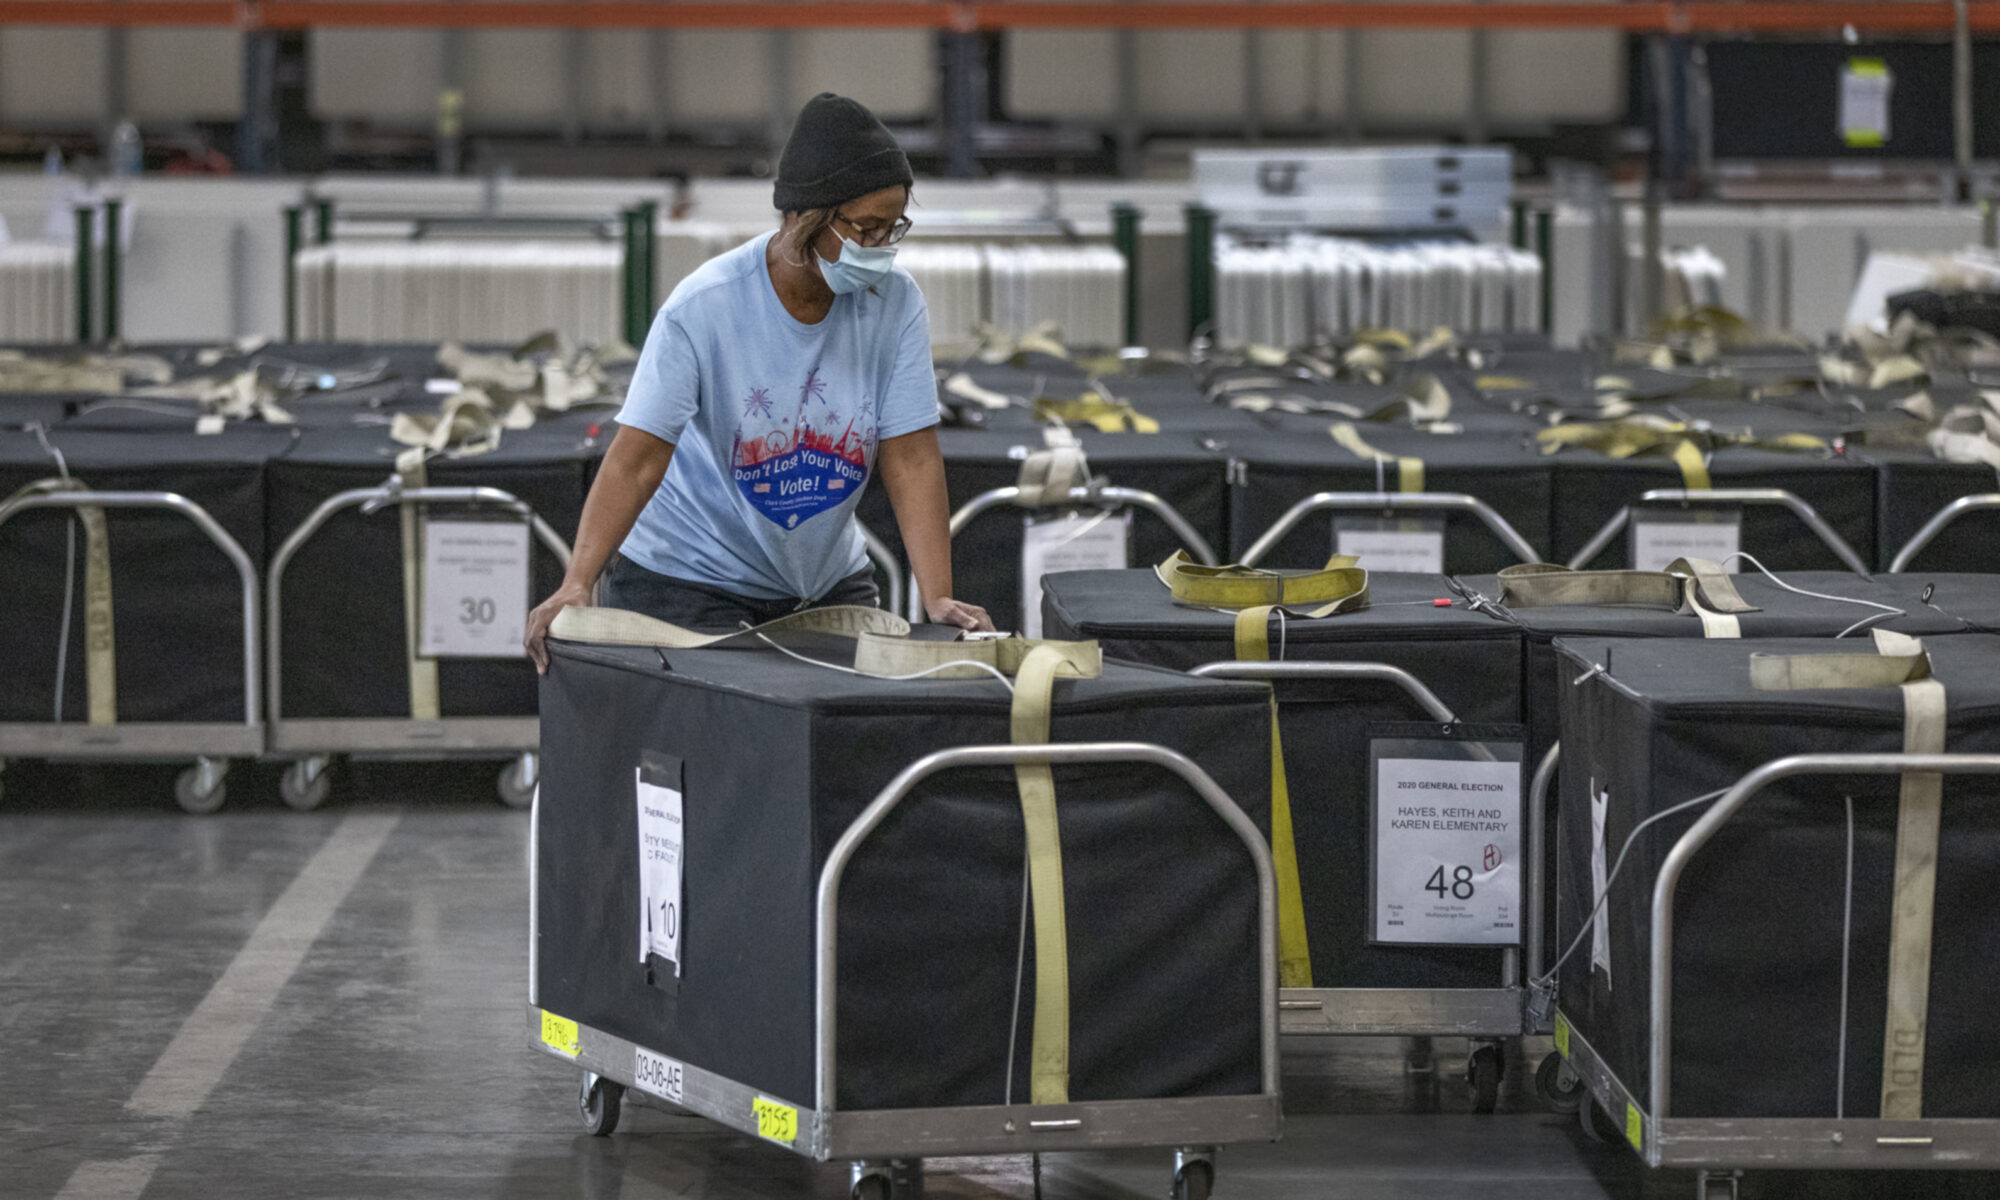 registrar of voter staffer wheels cart with ballots